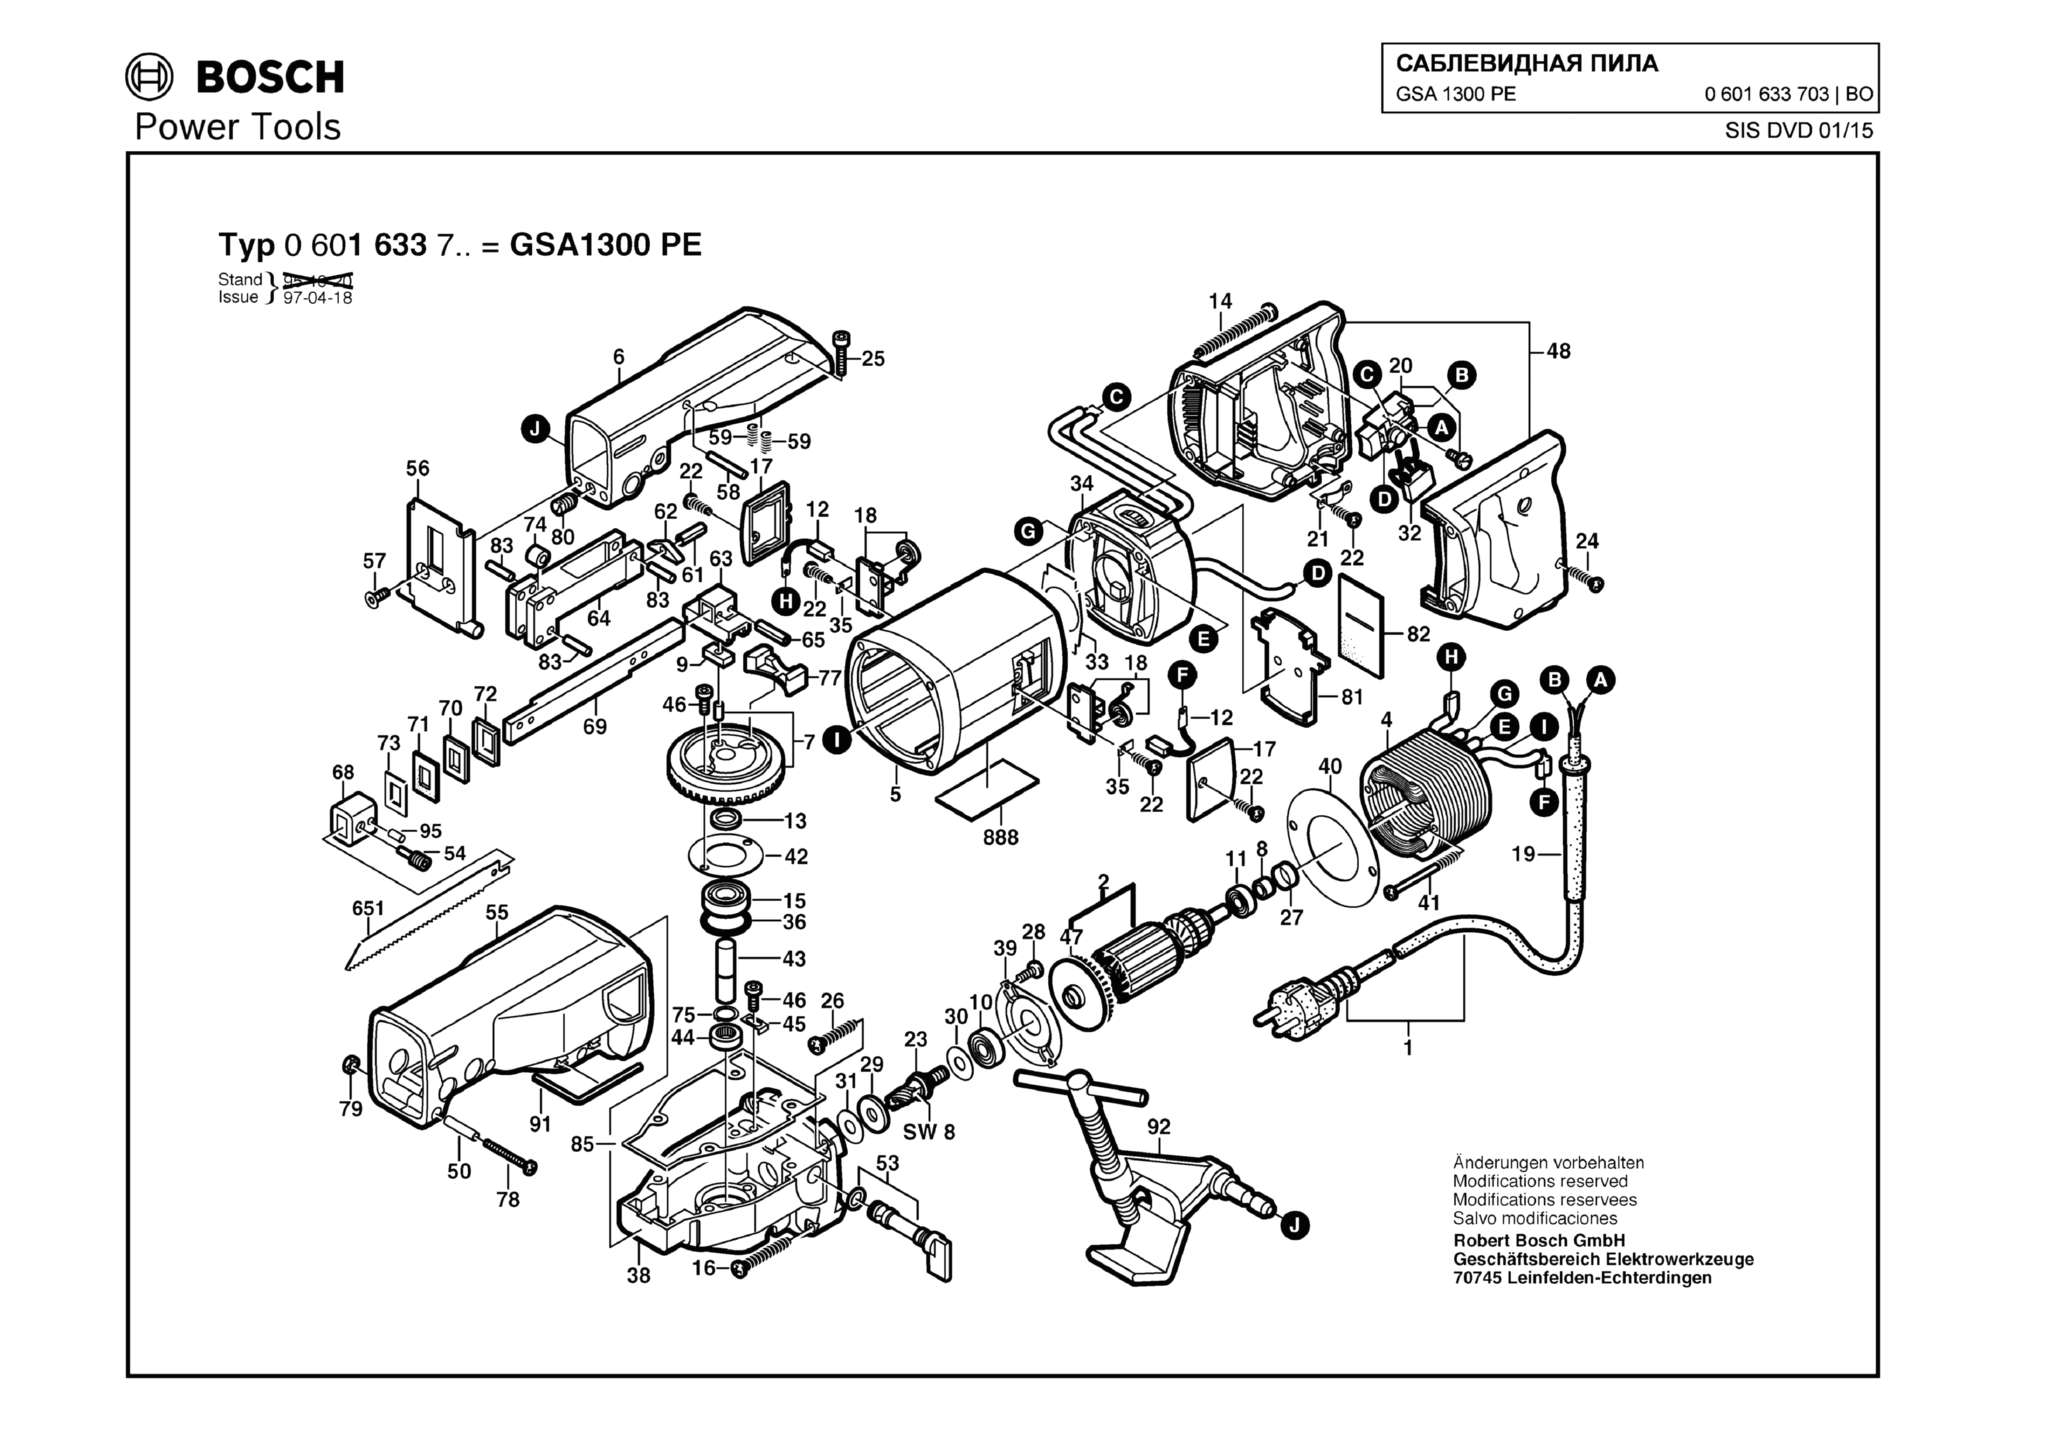 Запчасти, схема и деталировка Bosch GSA 1300 PE (ТИП 0601633703)